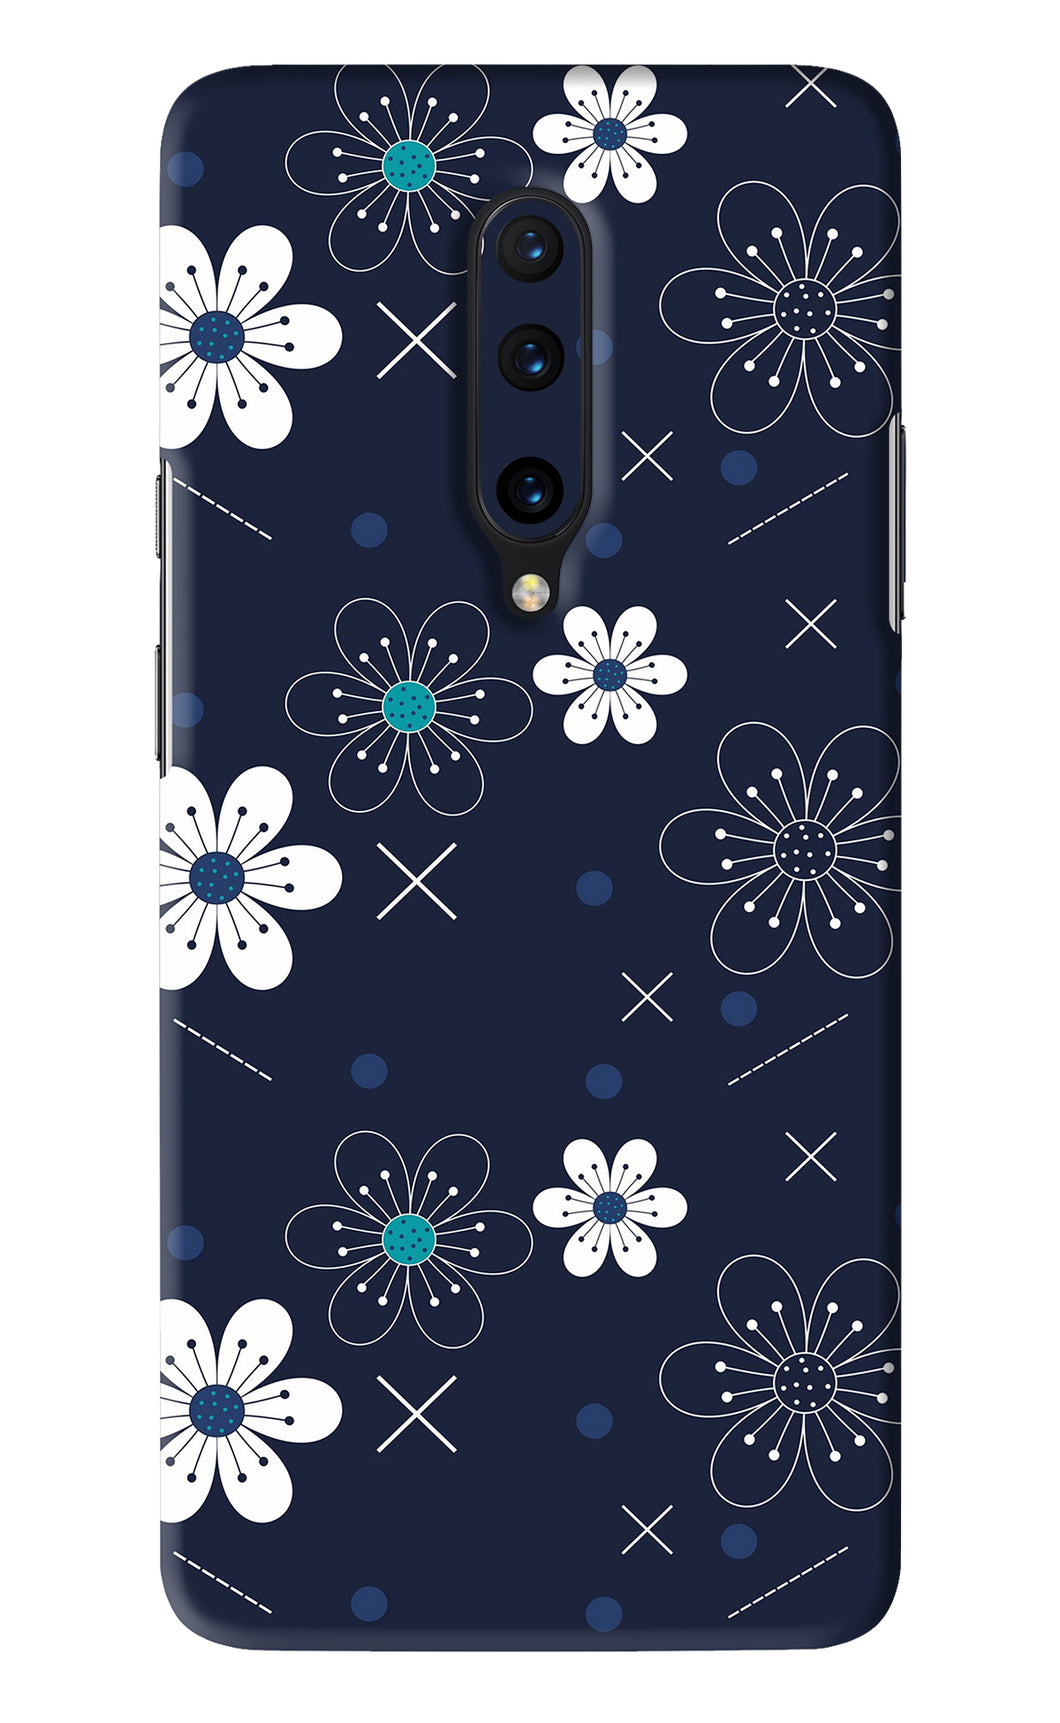 Flowers 4 OnePlus 7 Pro Back Skin Wrap